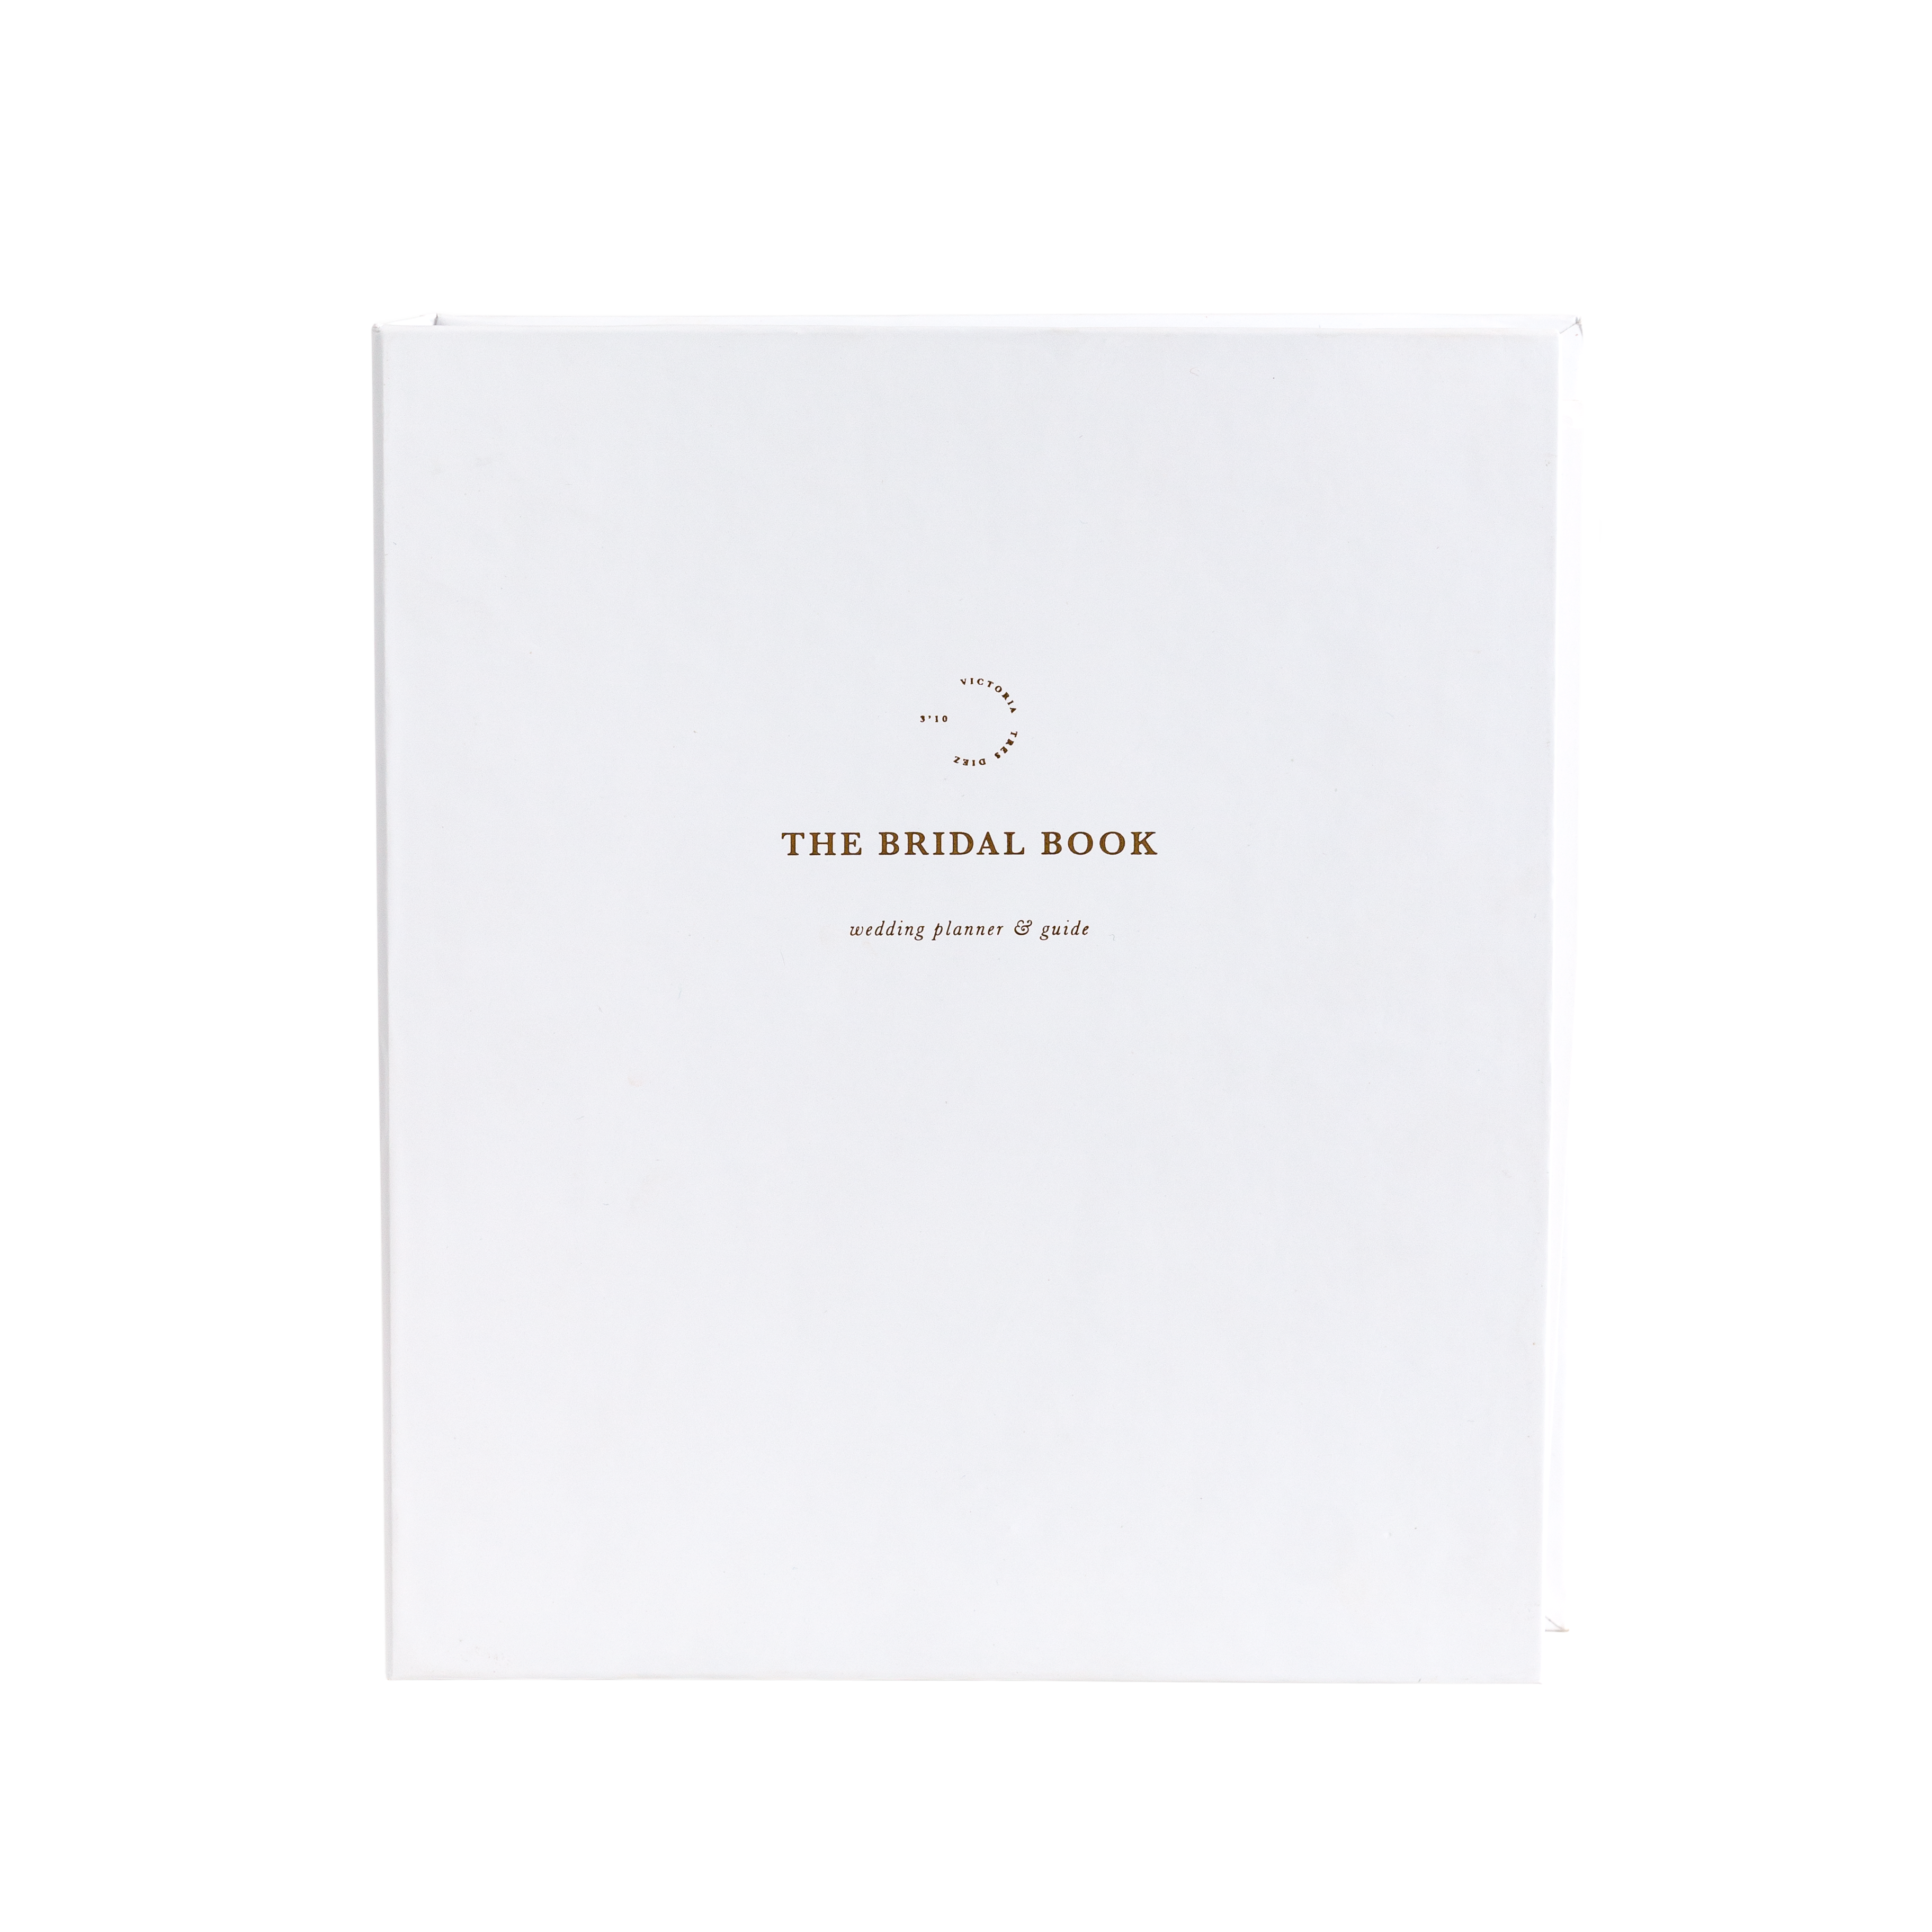 The Bridal Book Edición Especial - Wedding Planner & Guide